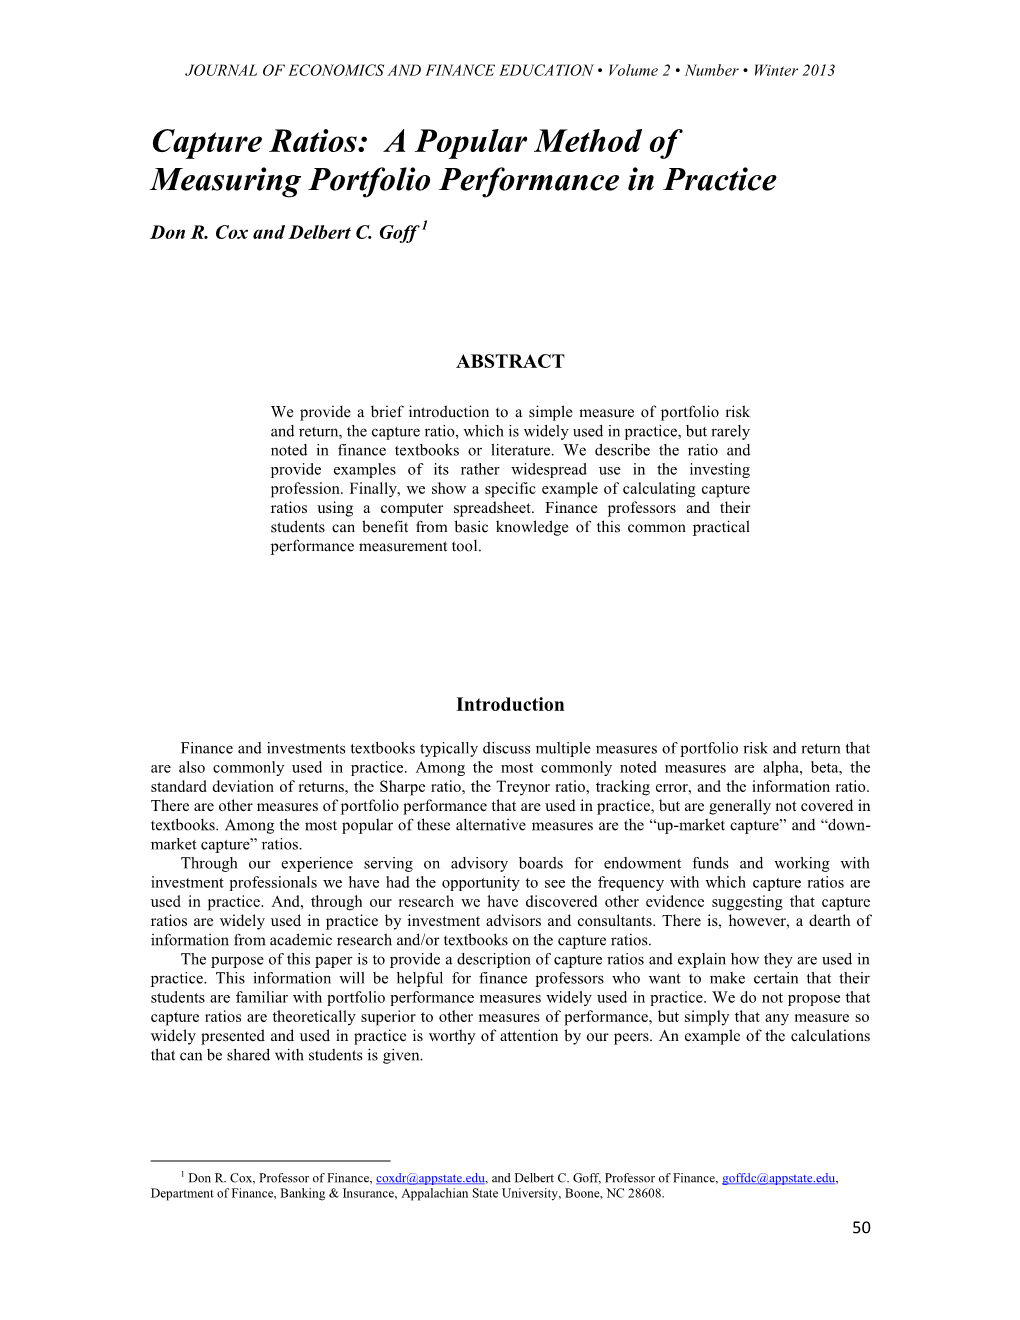 Capture Ratios: a Popular Method of Measuring Portfolio Performance in Practice